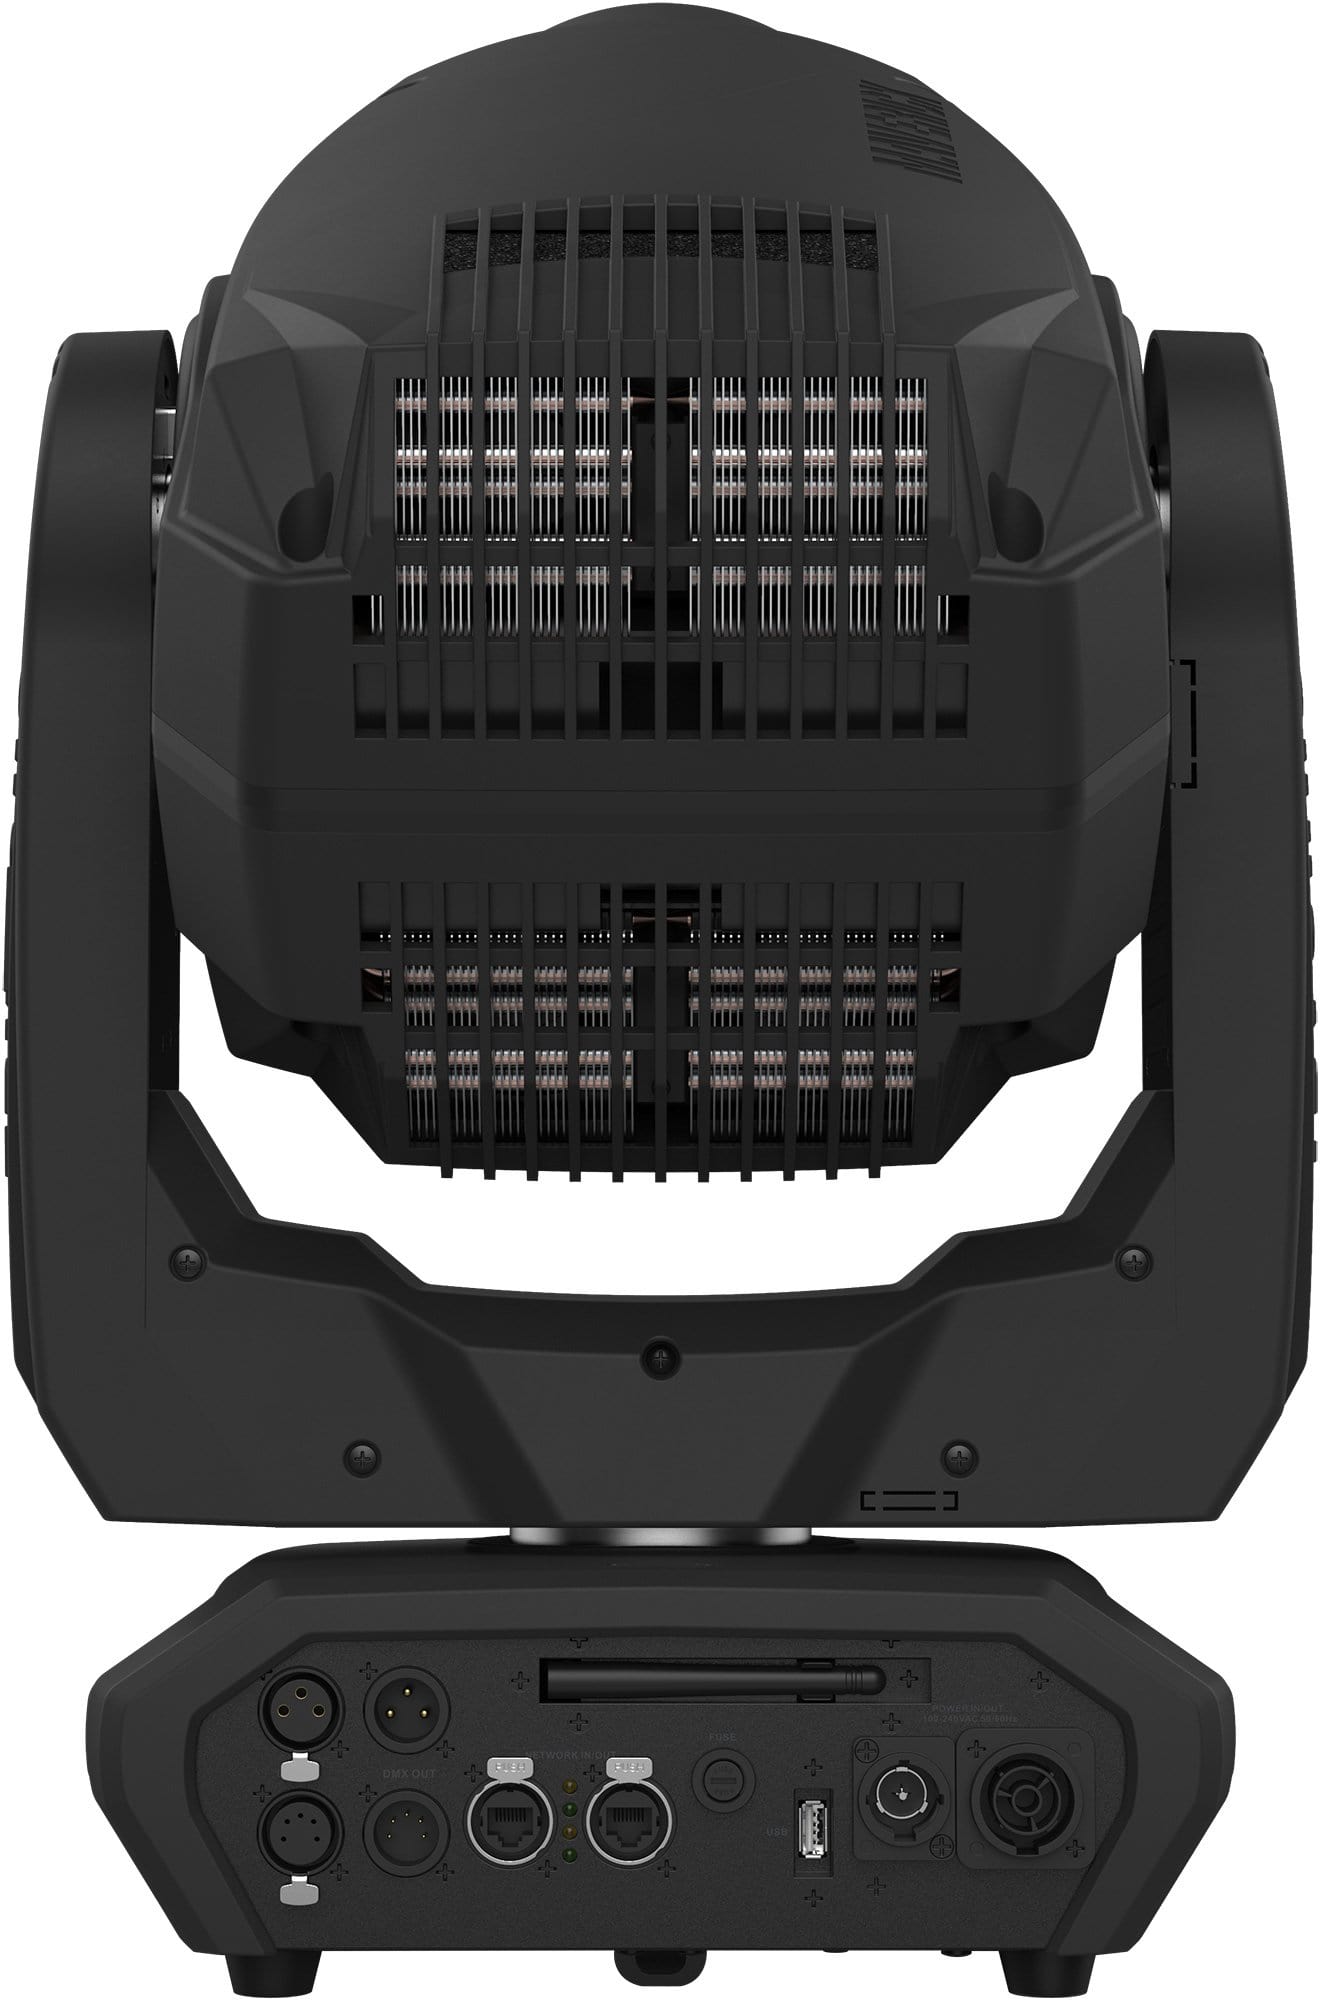 Chauvet Maverick Force 1 Spot 470W LED Moving Head - ProSound and Stage Lighting